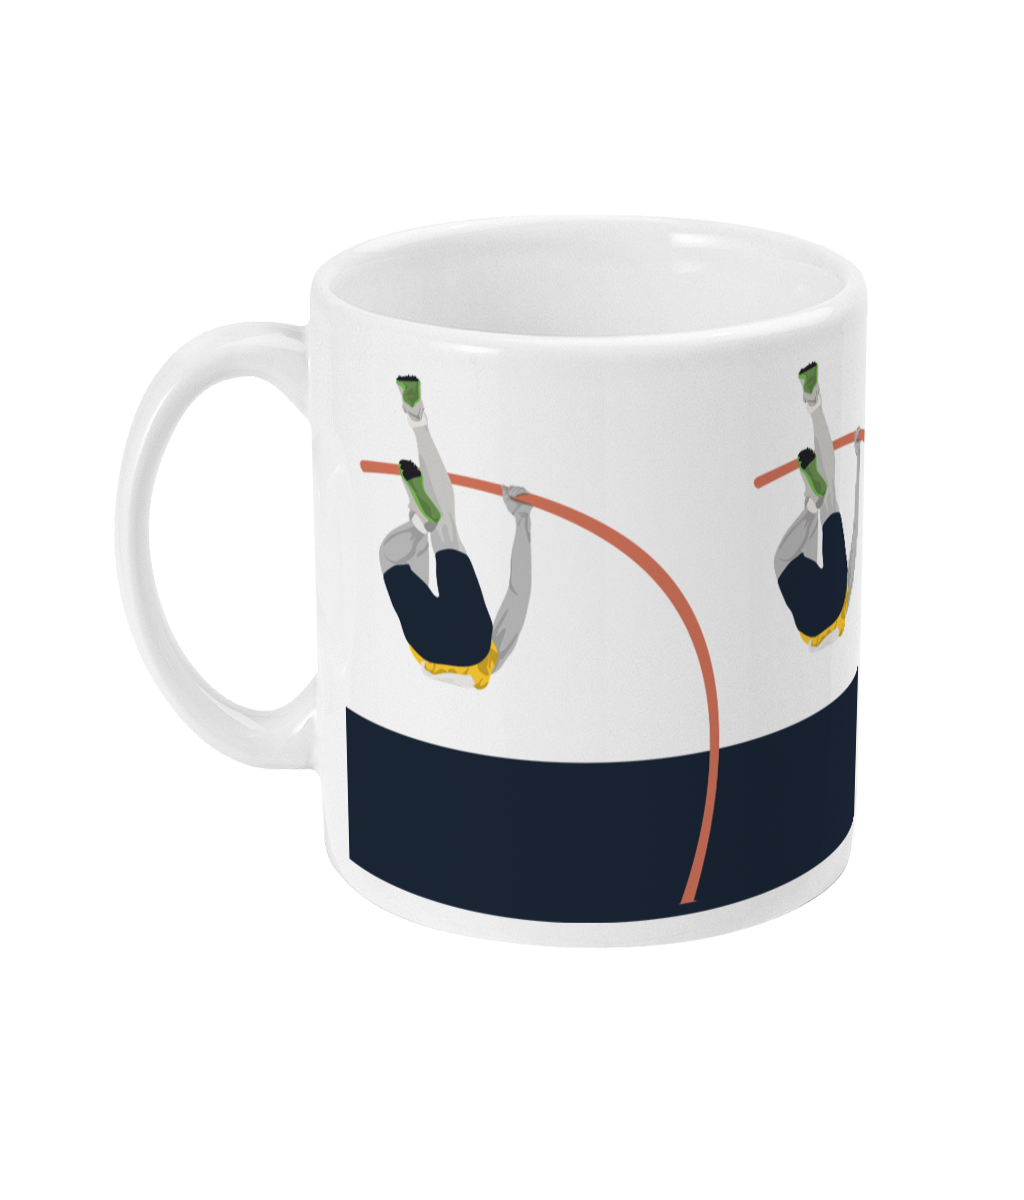 Athletics cup or mug "Pole vault" - Customizable